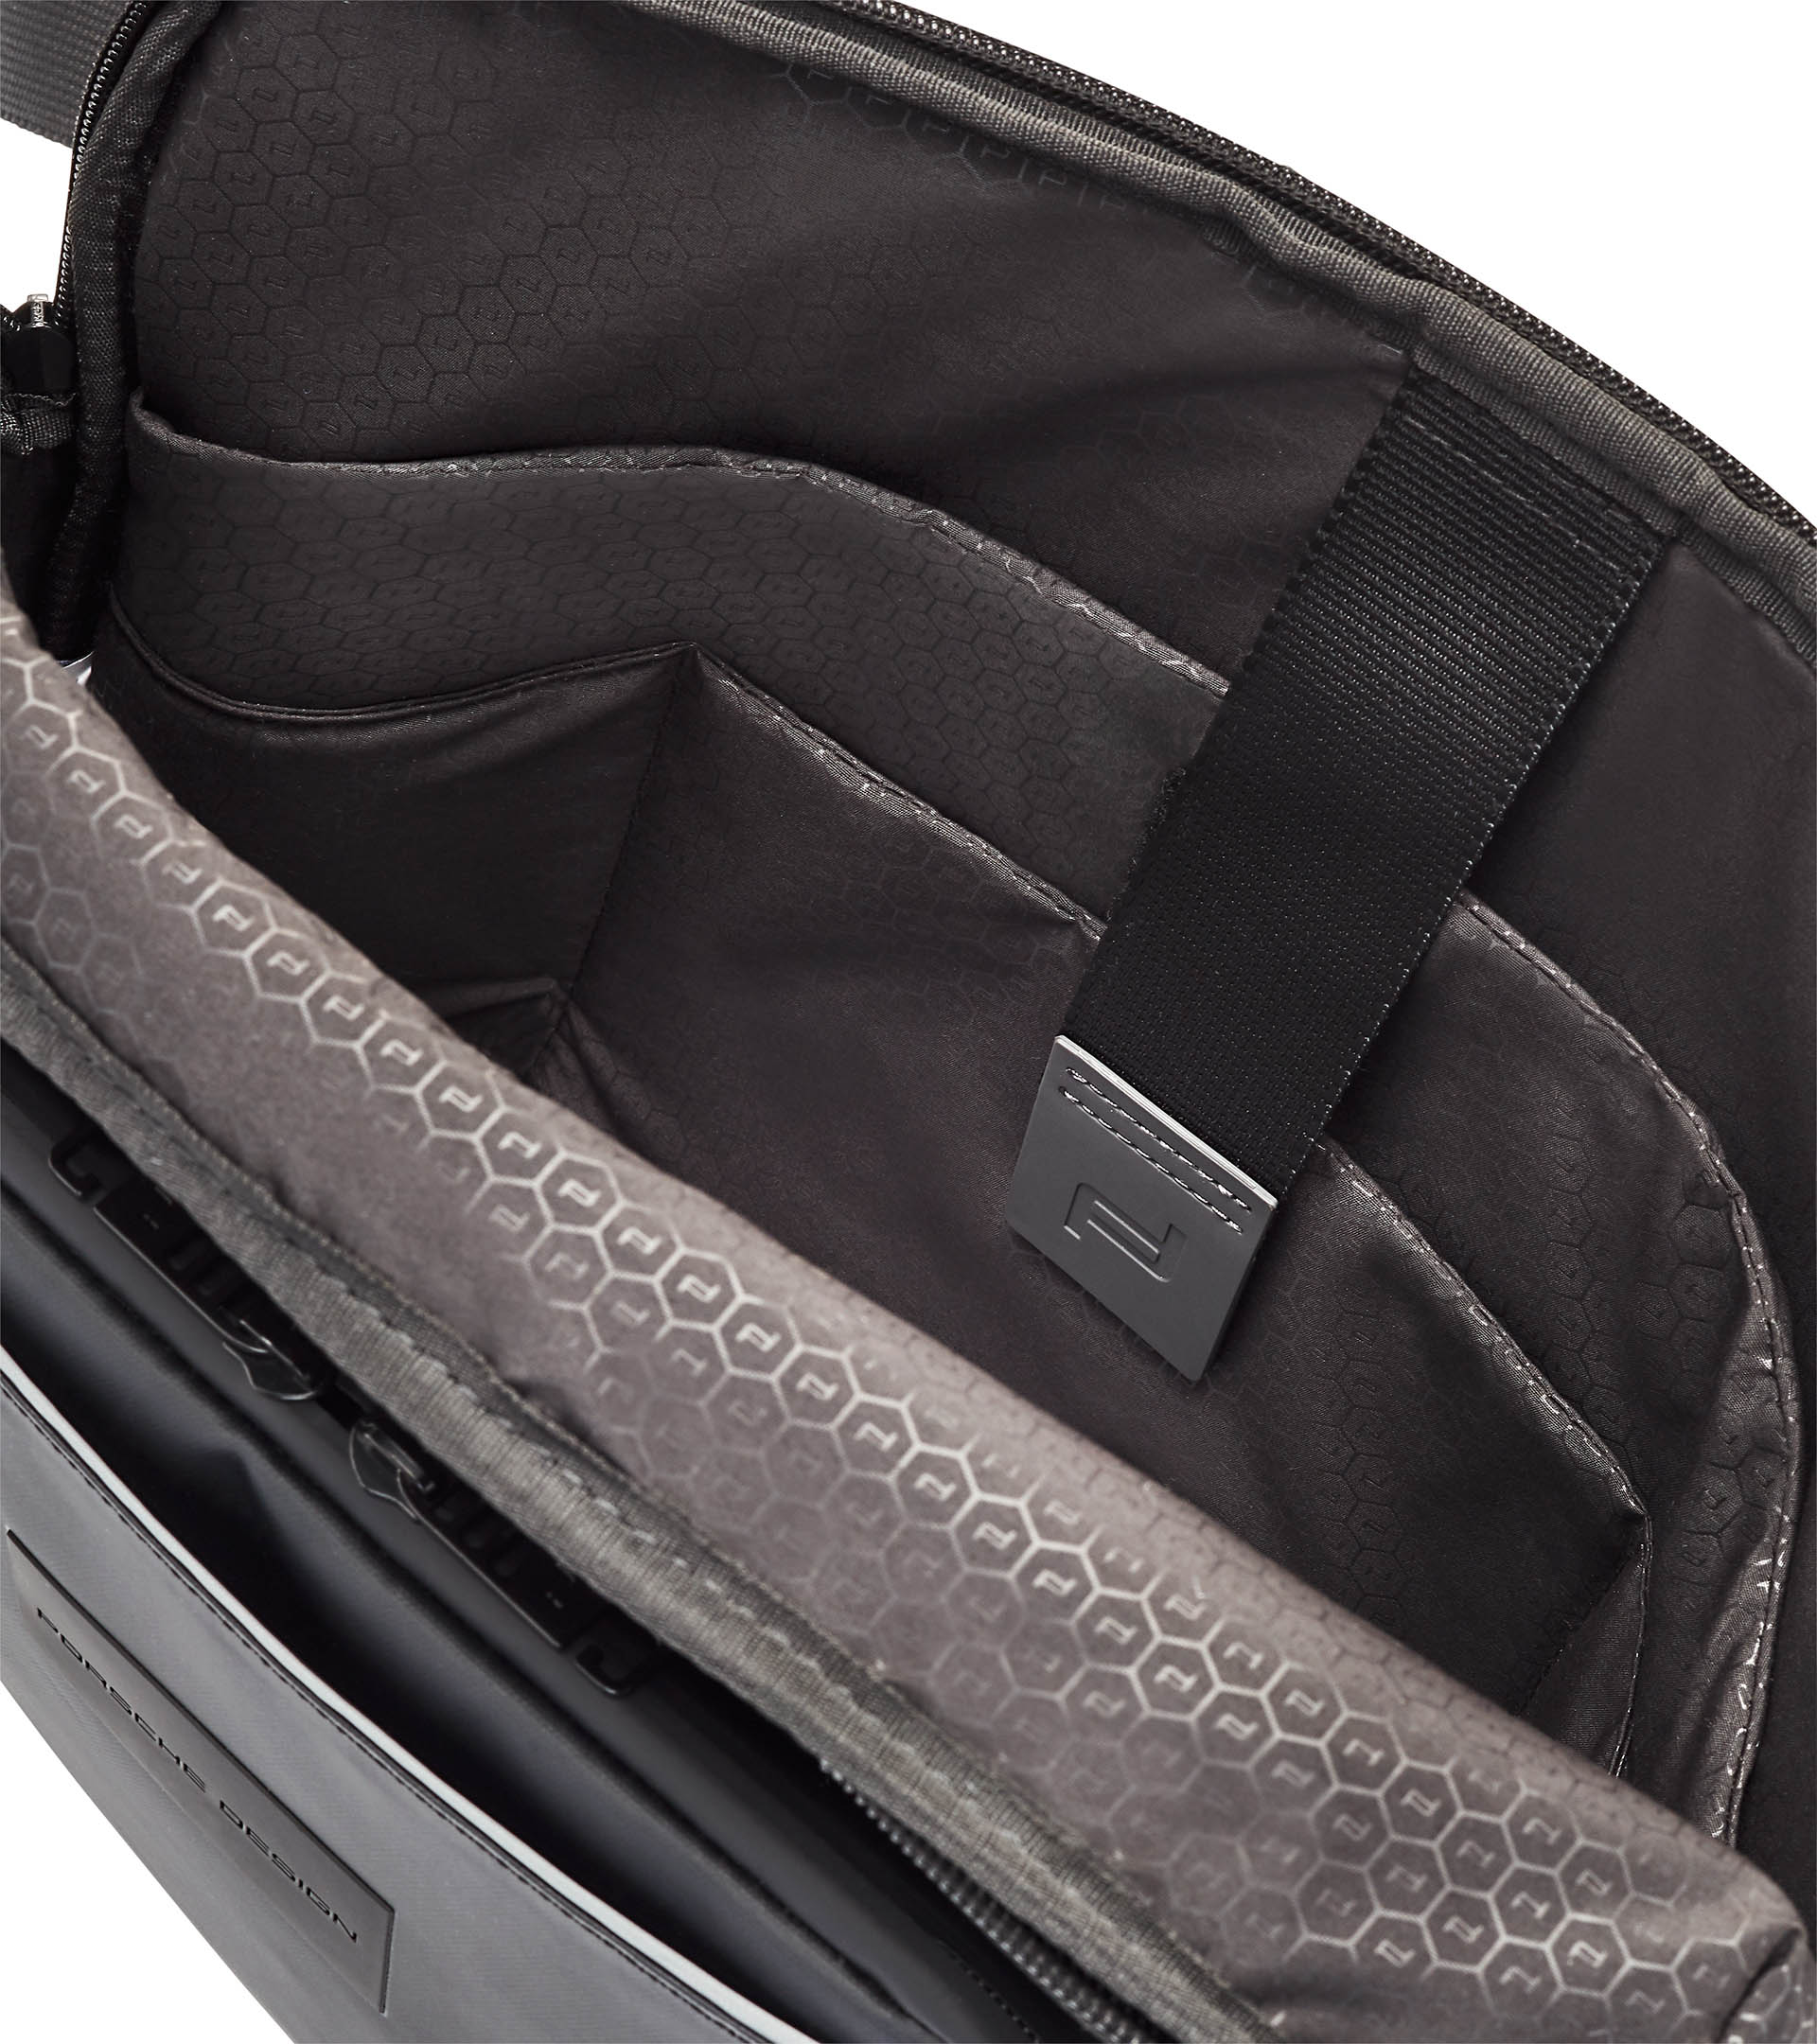 Urban Eco Messenger Bag - Luxury Business Bags for Men | Porsche Design ...